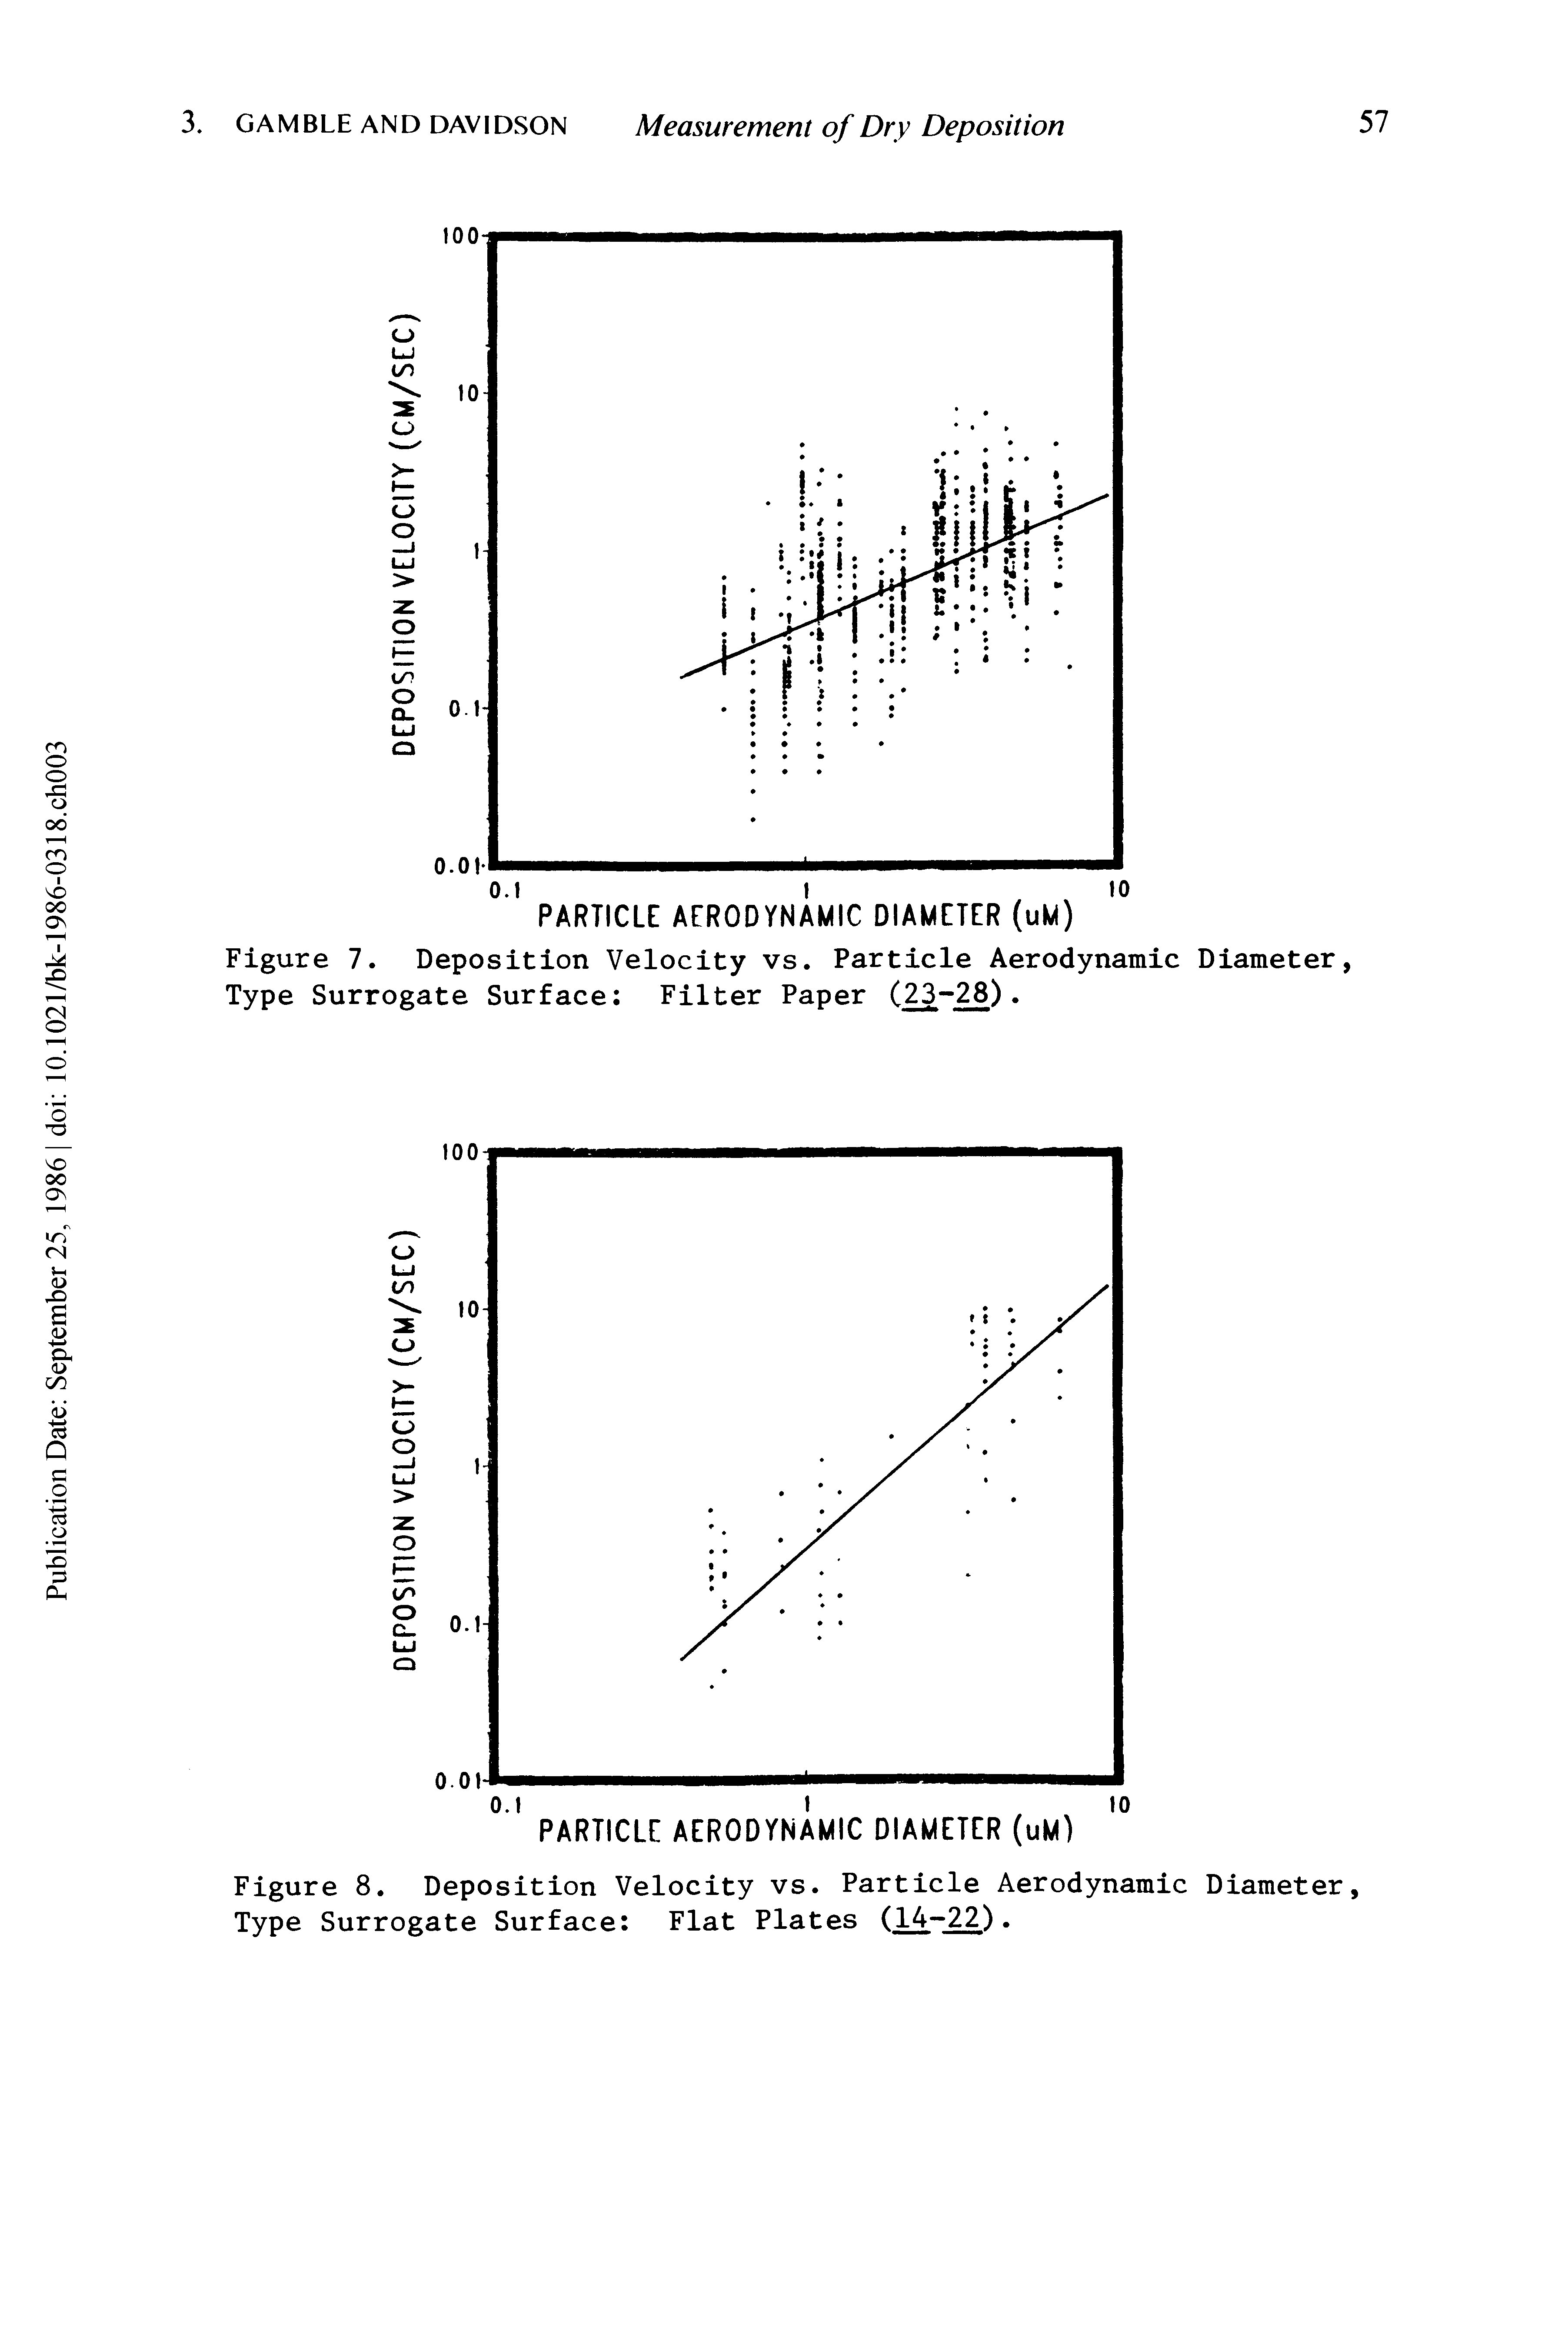 Figure 7. Deposition Velocity vs. Particle Aerodynamic Diameter, Type Surrogate Surface Filter Paper (23-28).